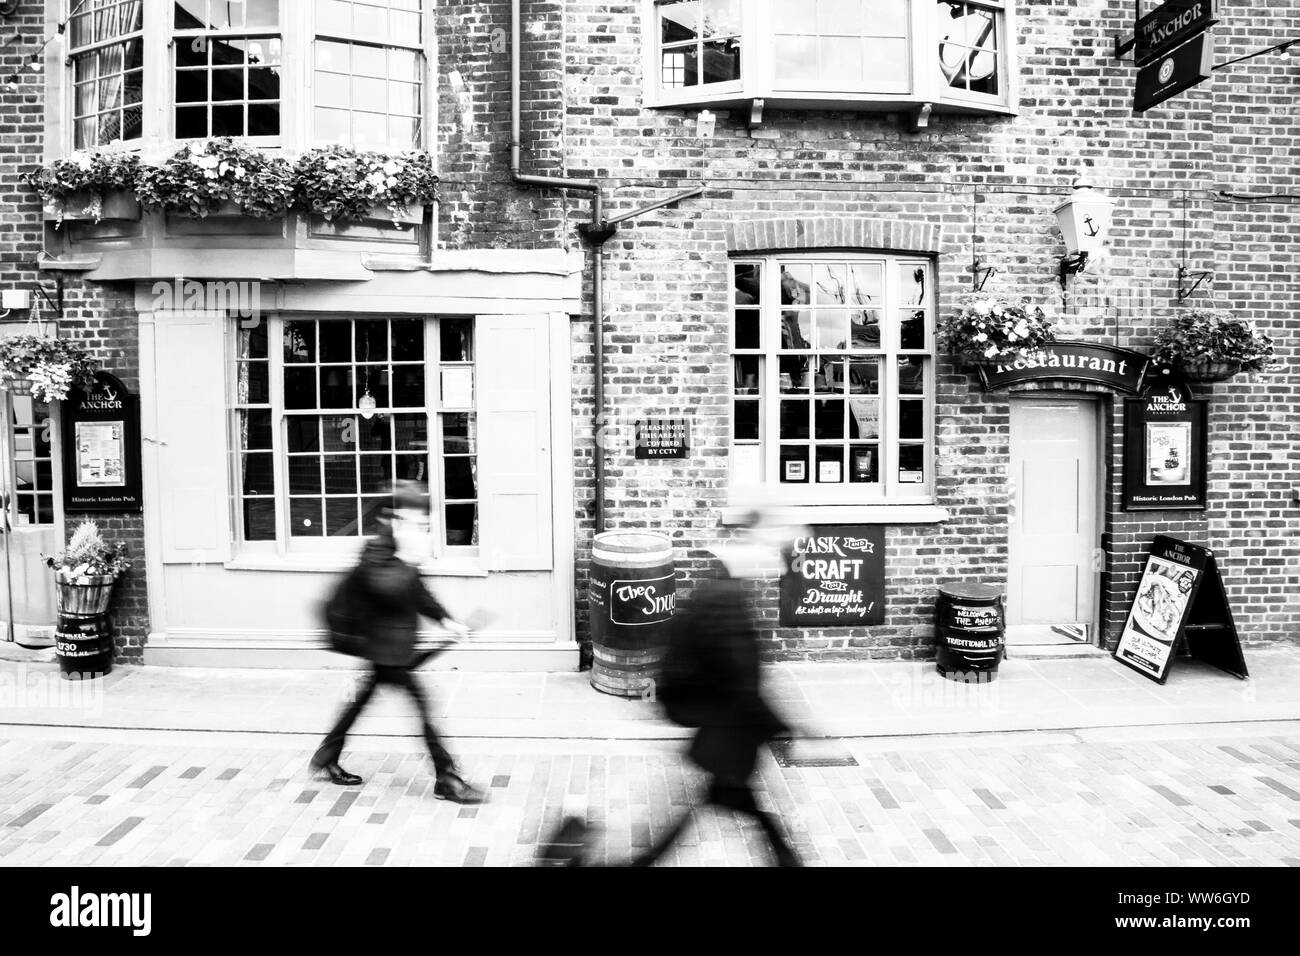 Der Anker, Pub in London, street scene, Passanten Stockfoto